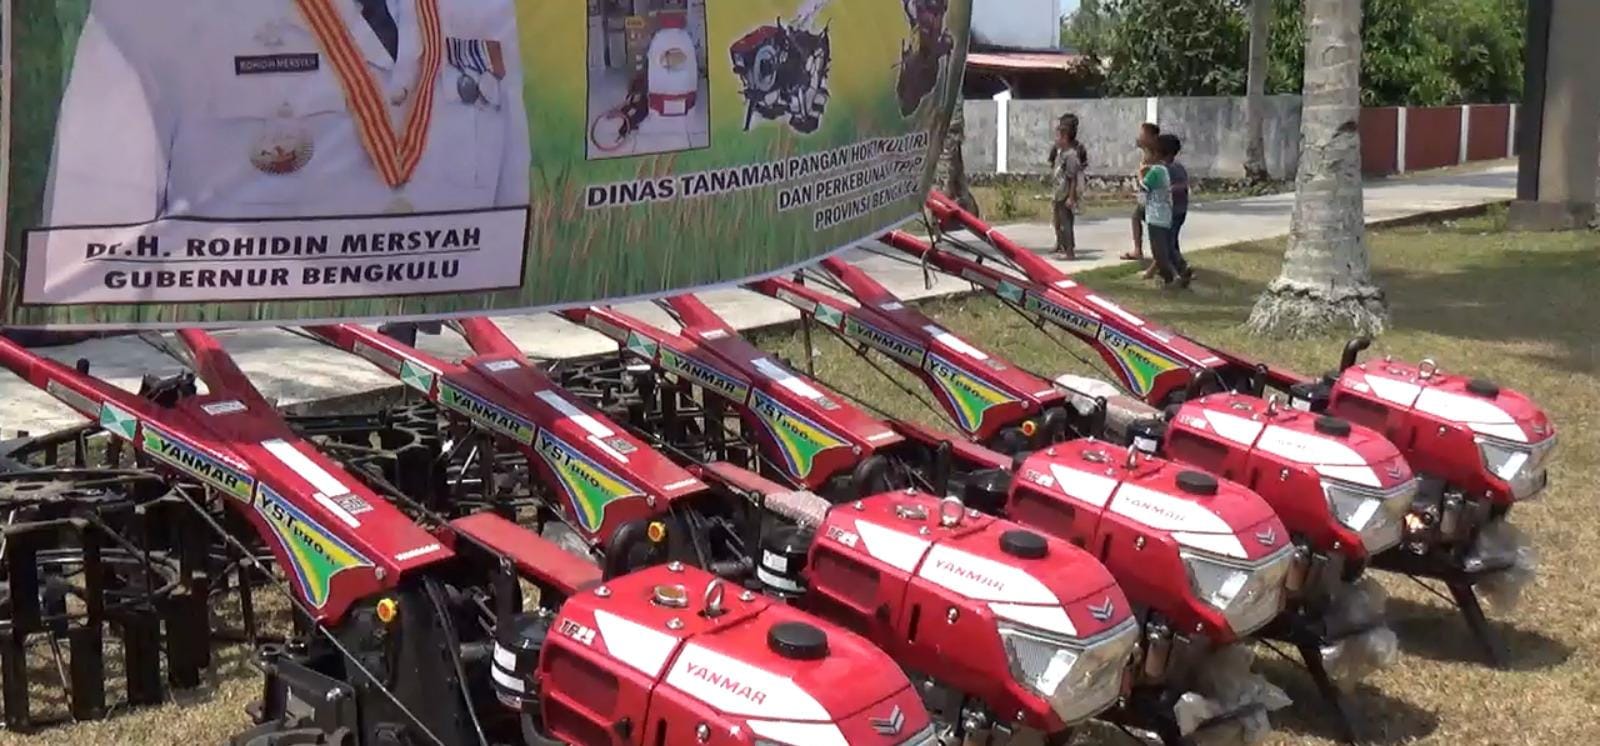 Gubernur Bengkulu Bagikan 5 Unit Hand Traktor dan 14 Hand Sprayer untuk Poktan Kaur